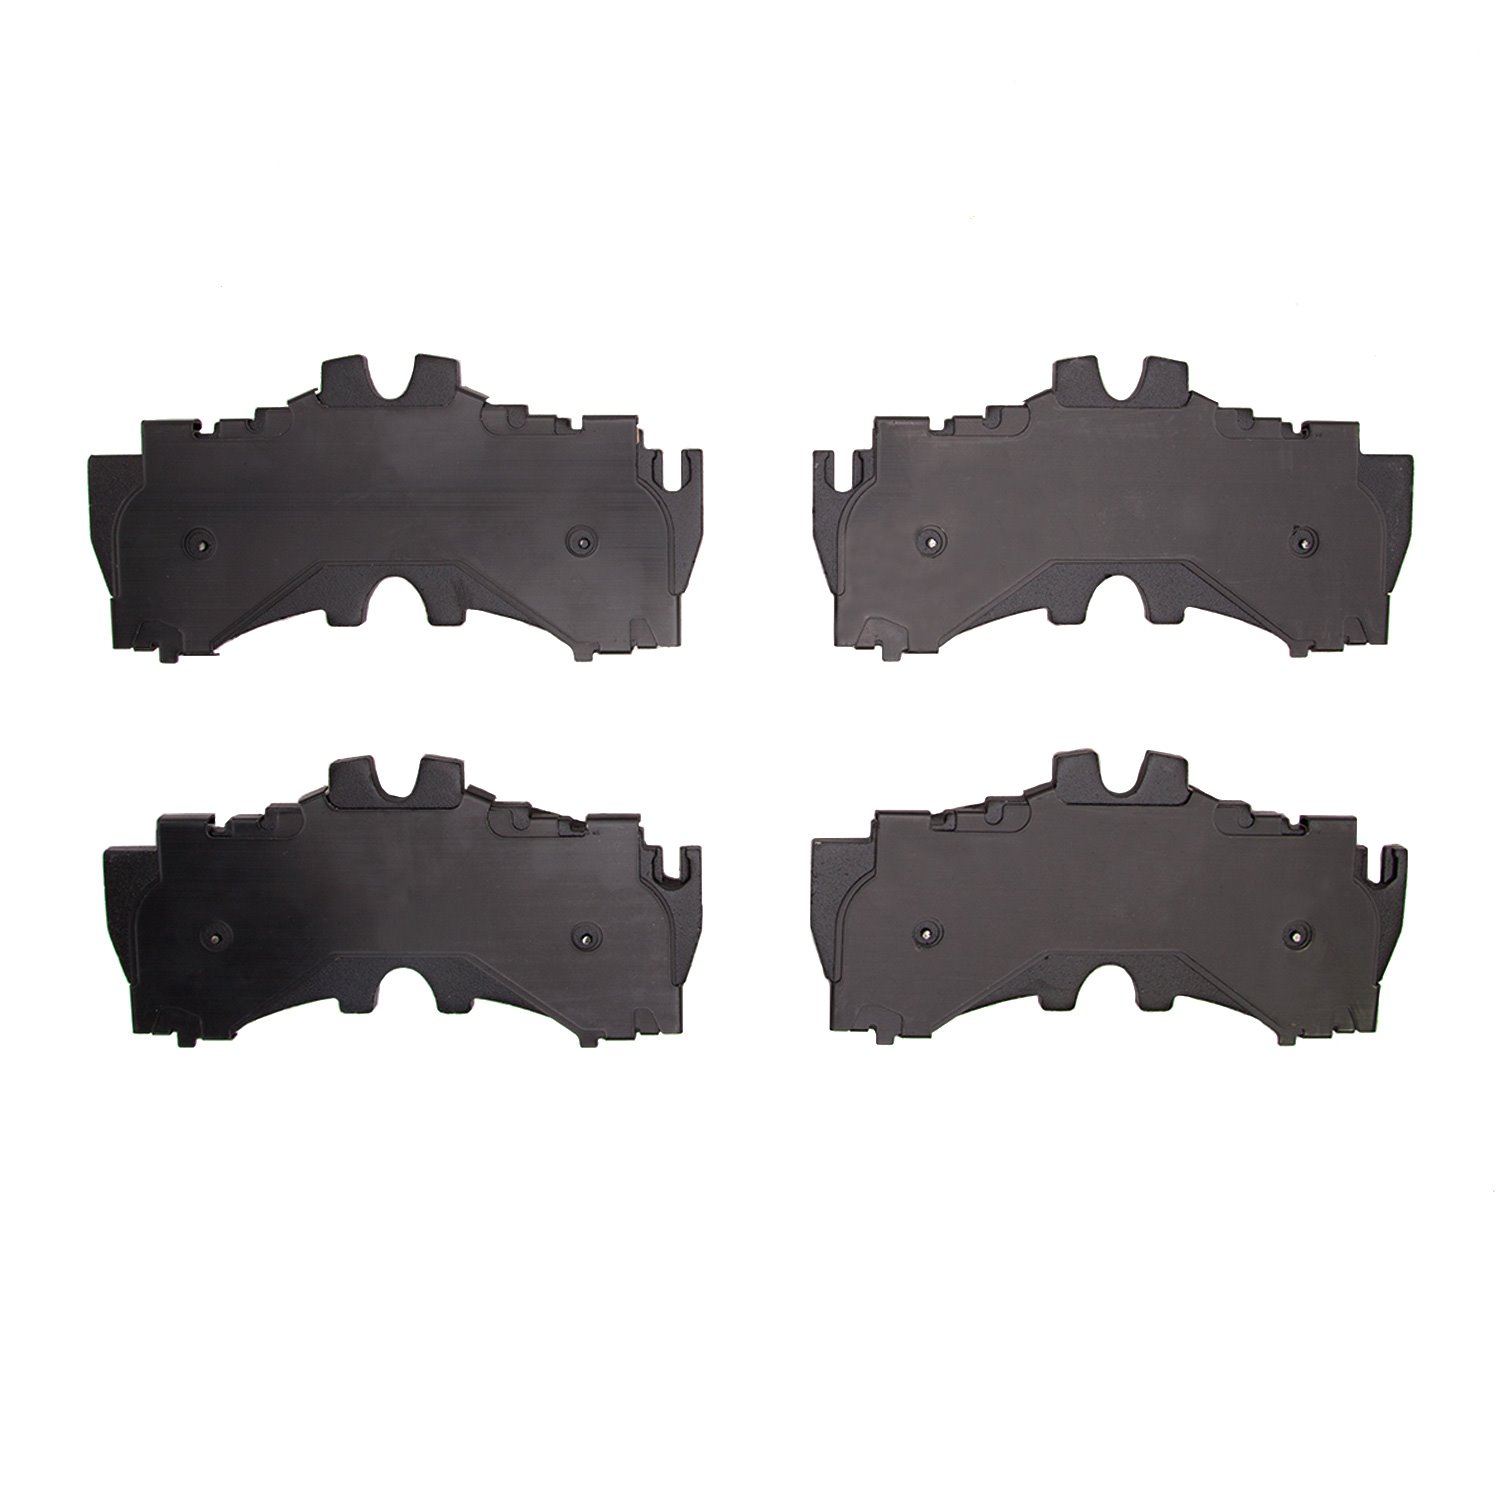 1310-2062-00 3000-Series Ceramic Brake Pads, Fits Select Lexus/Toyota/Scion, Position: Front